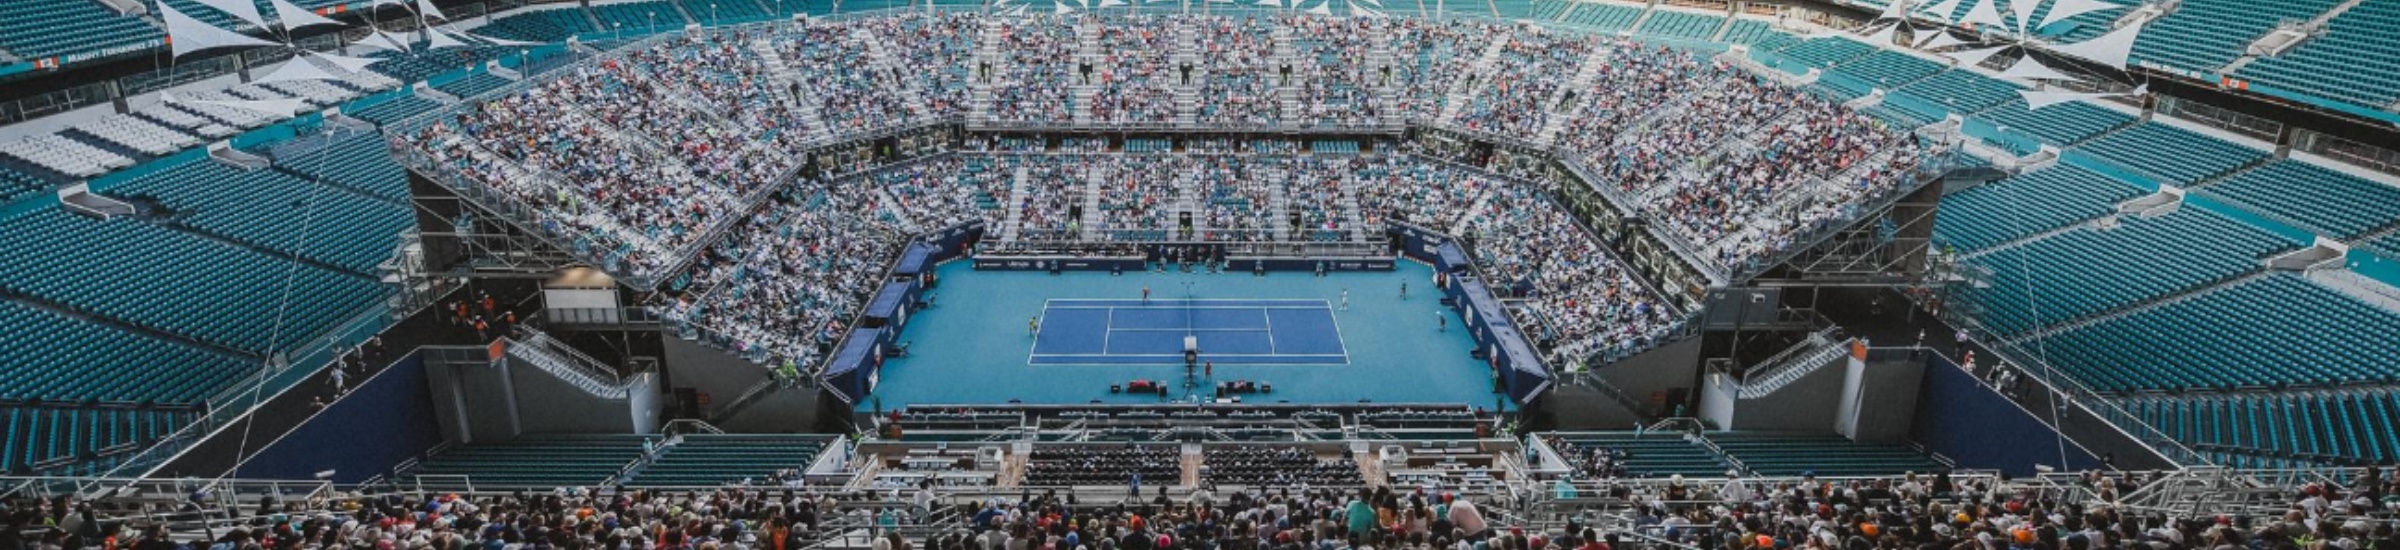 seafood get nervous Mobilize hard rock stadium tennis seating chart